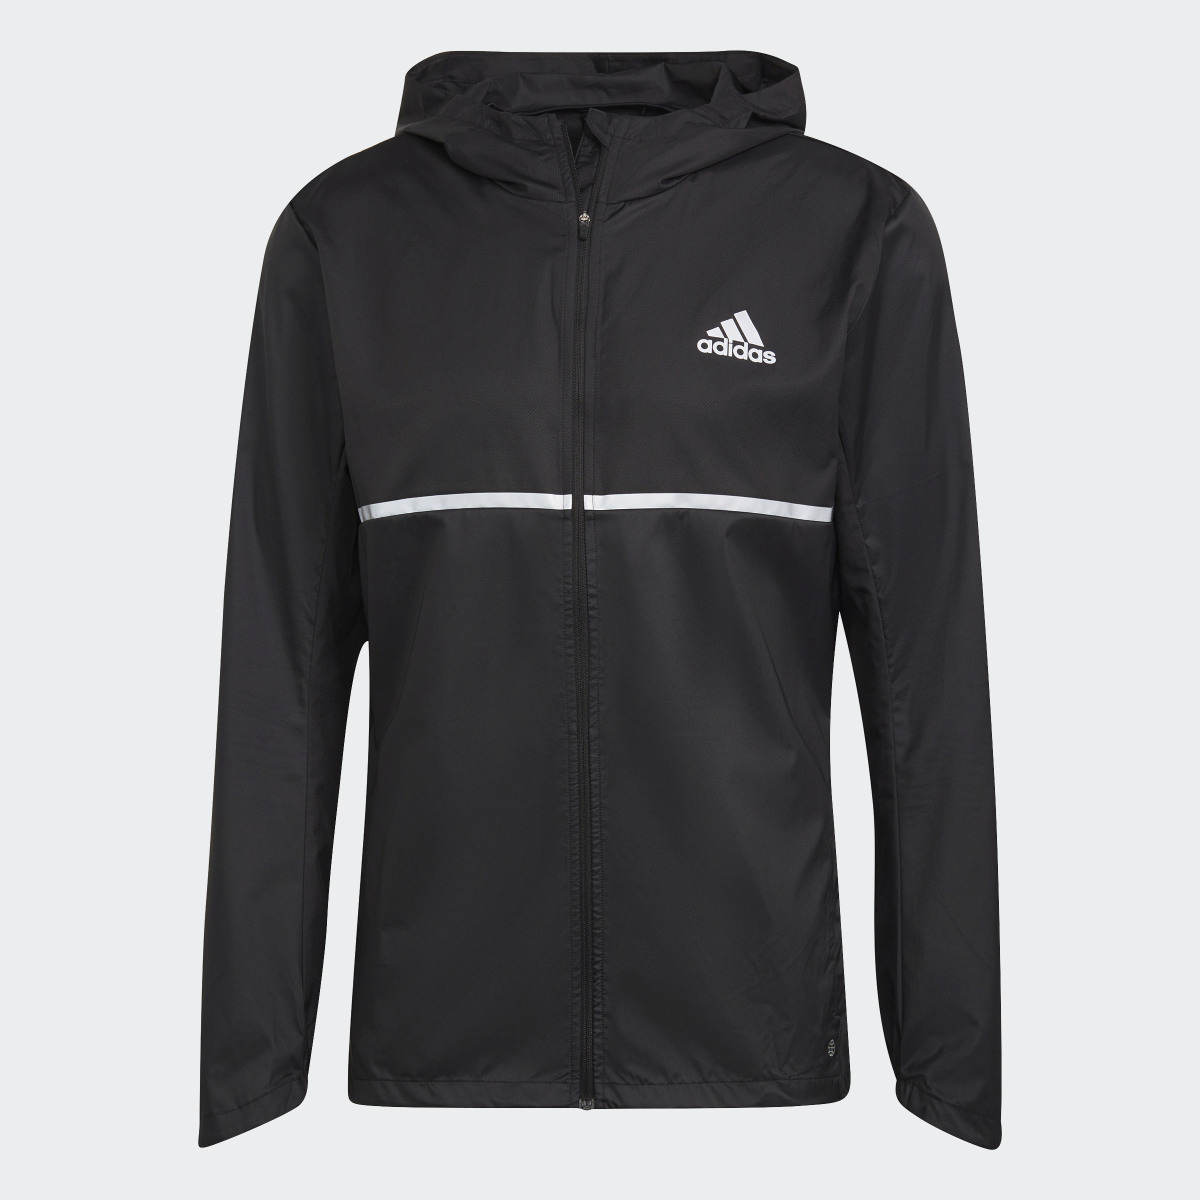 Adidas Own the Run Jacket. 5